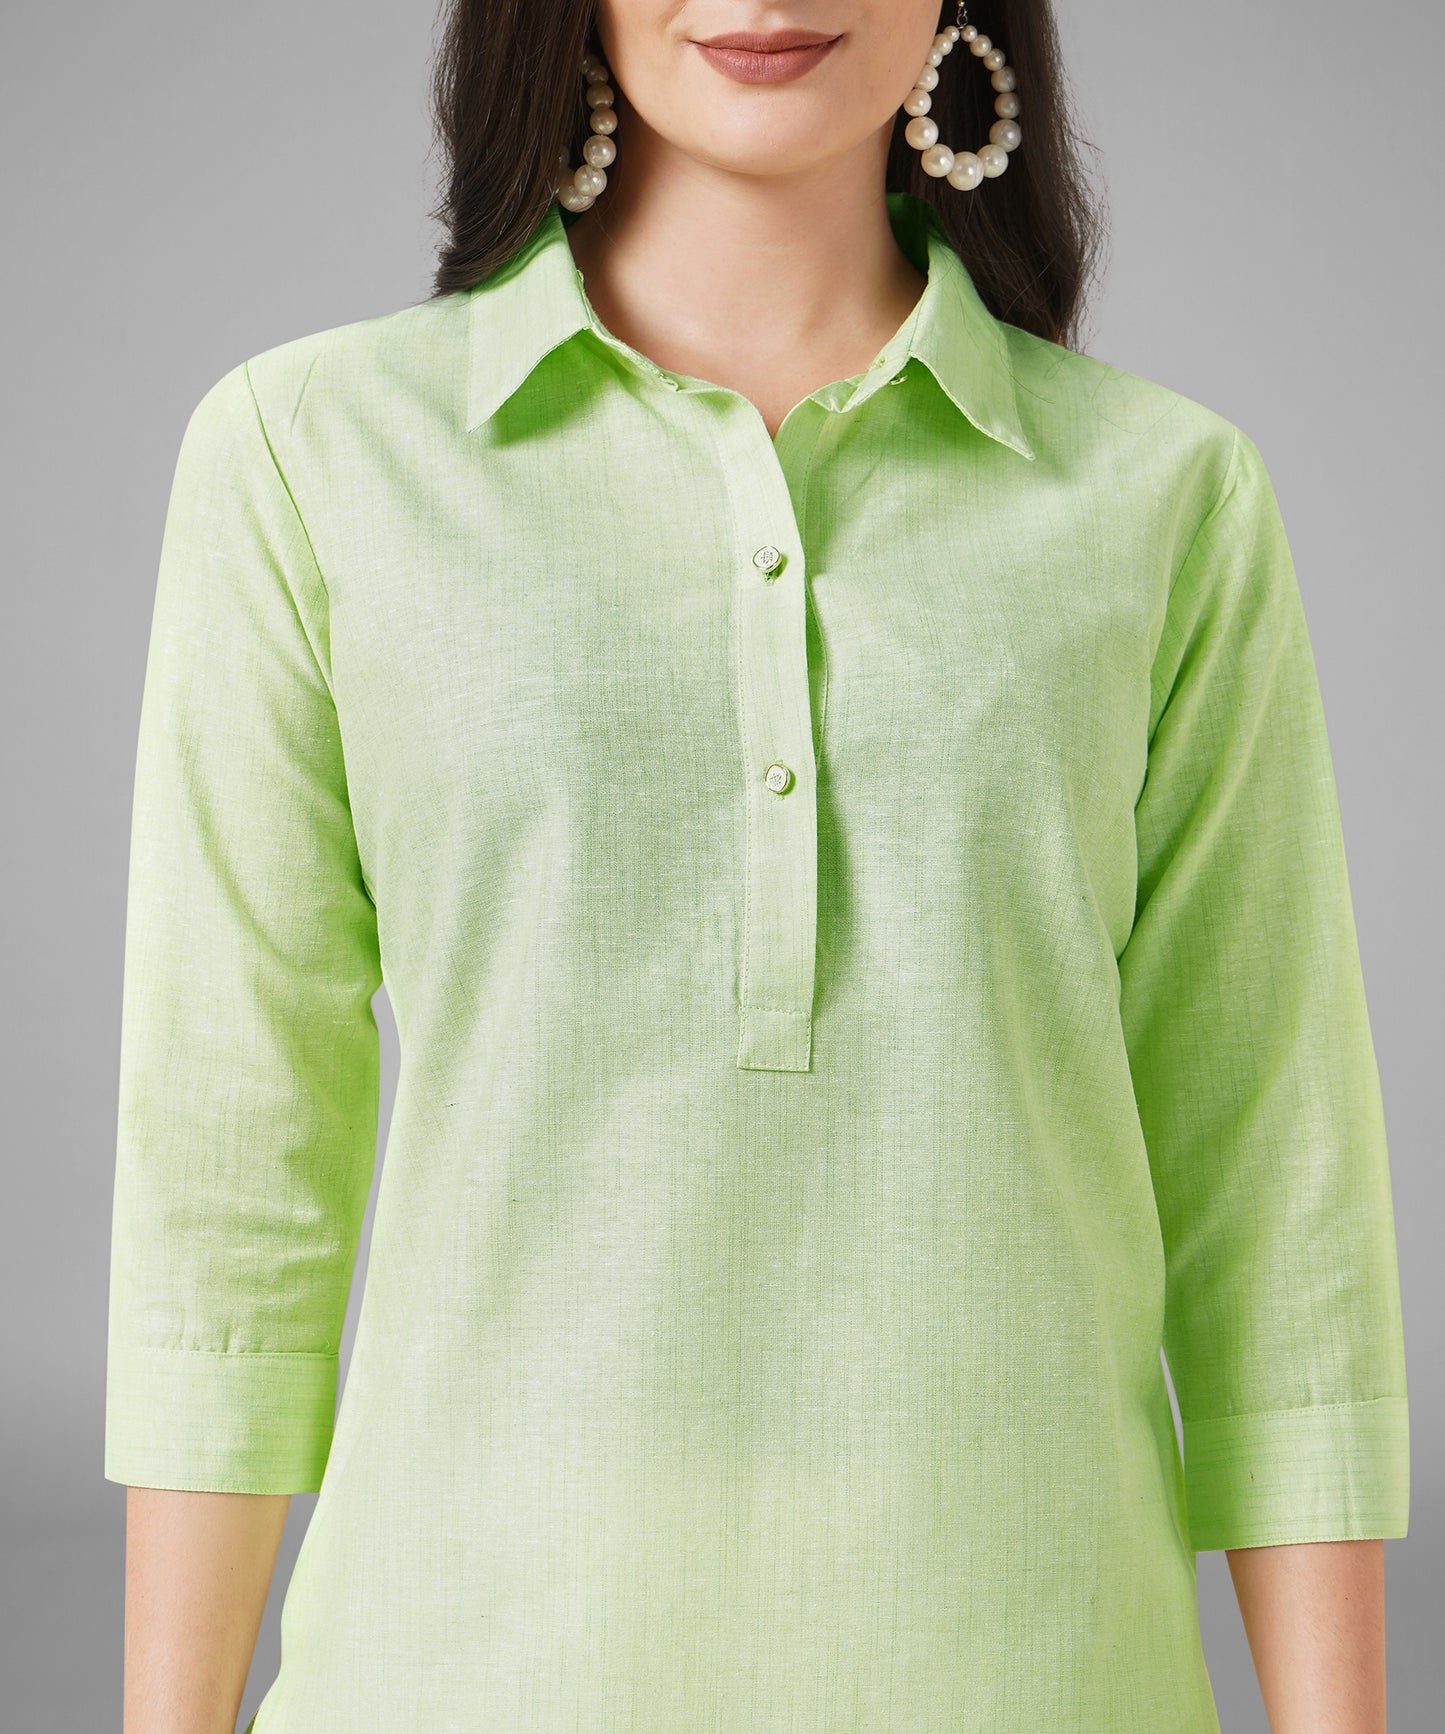 Cotton Kurta For Women Collar Design Pattern with Button Style, Green